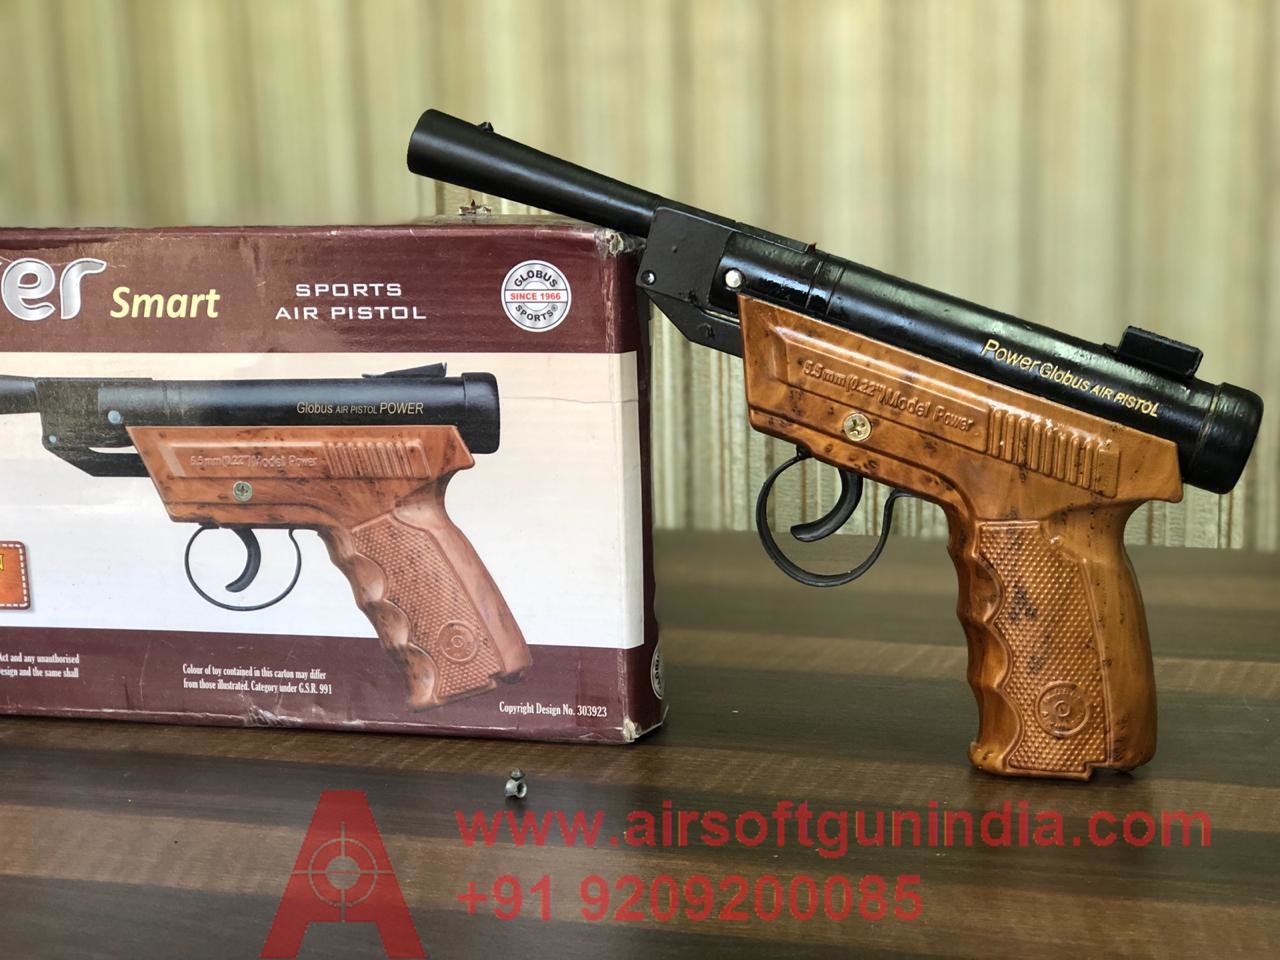 Power Sports Air Pistol By Airsoft Gun India Wooden Texture